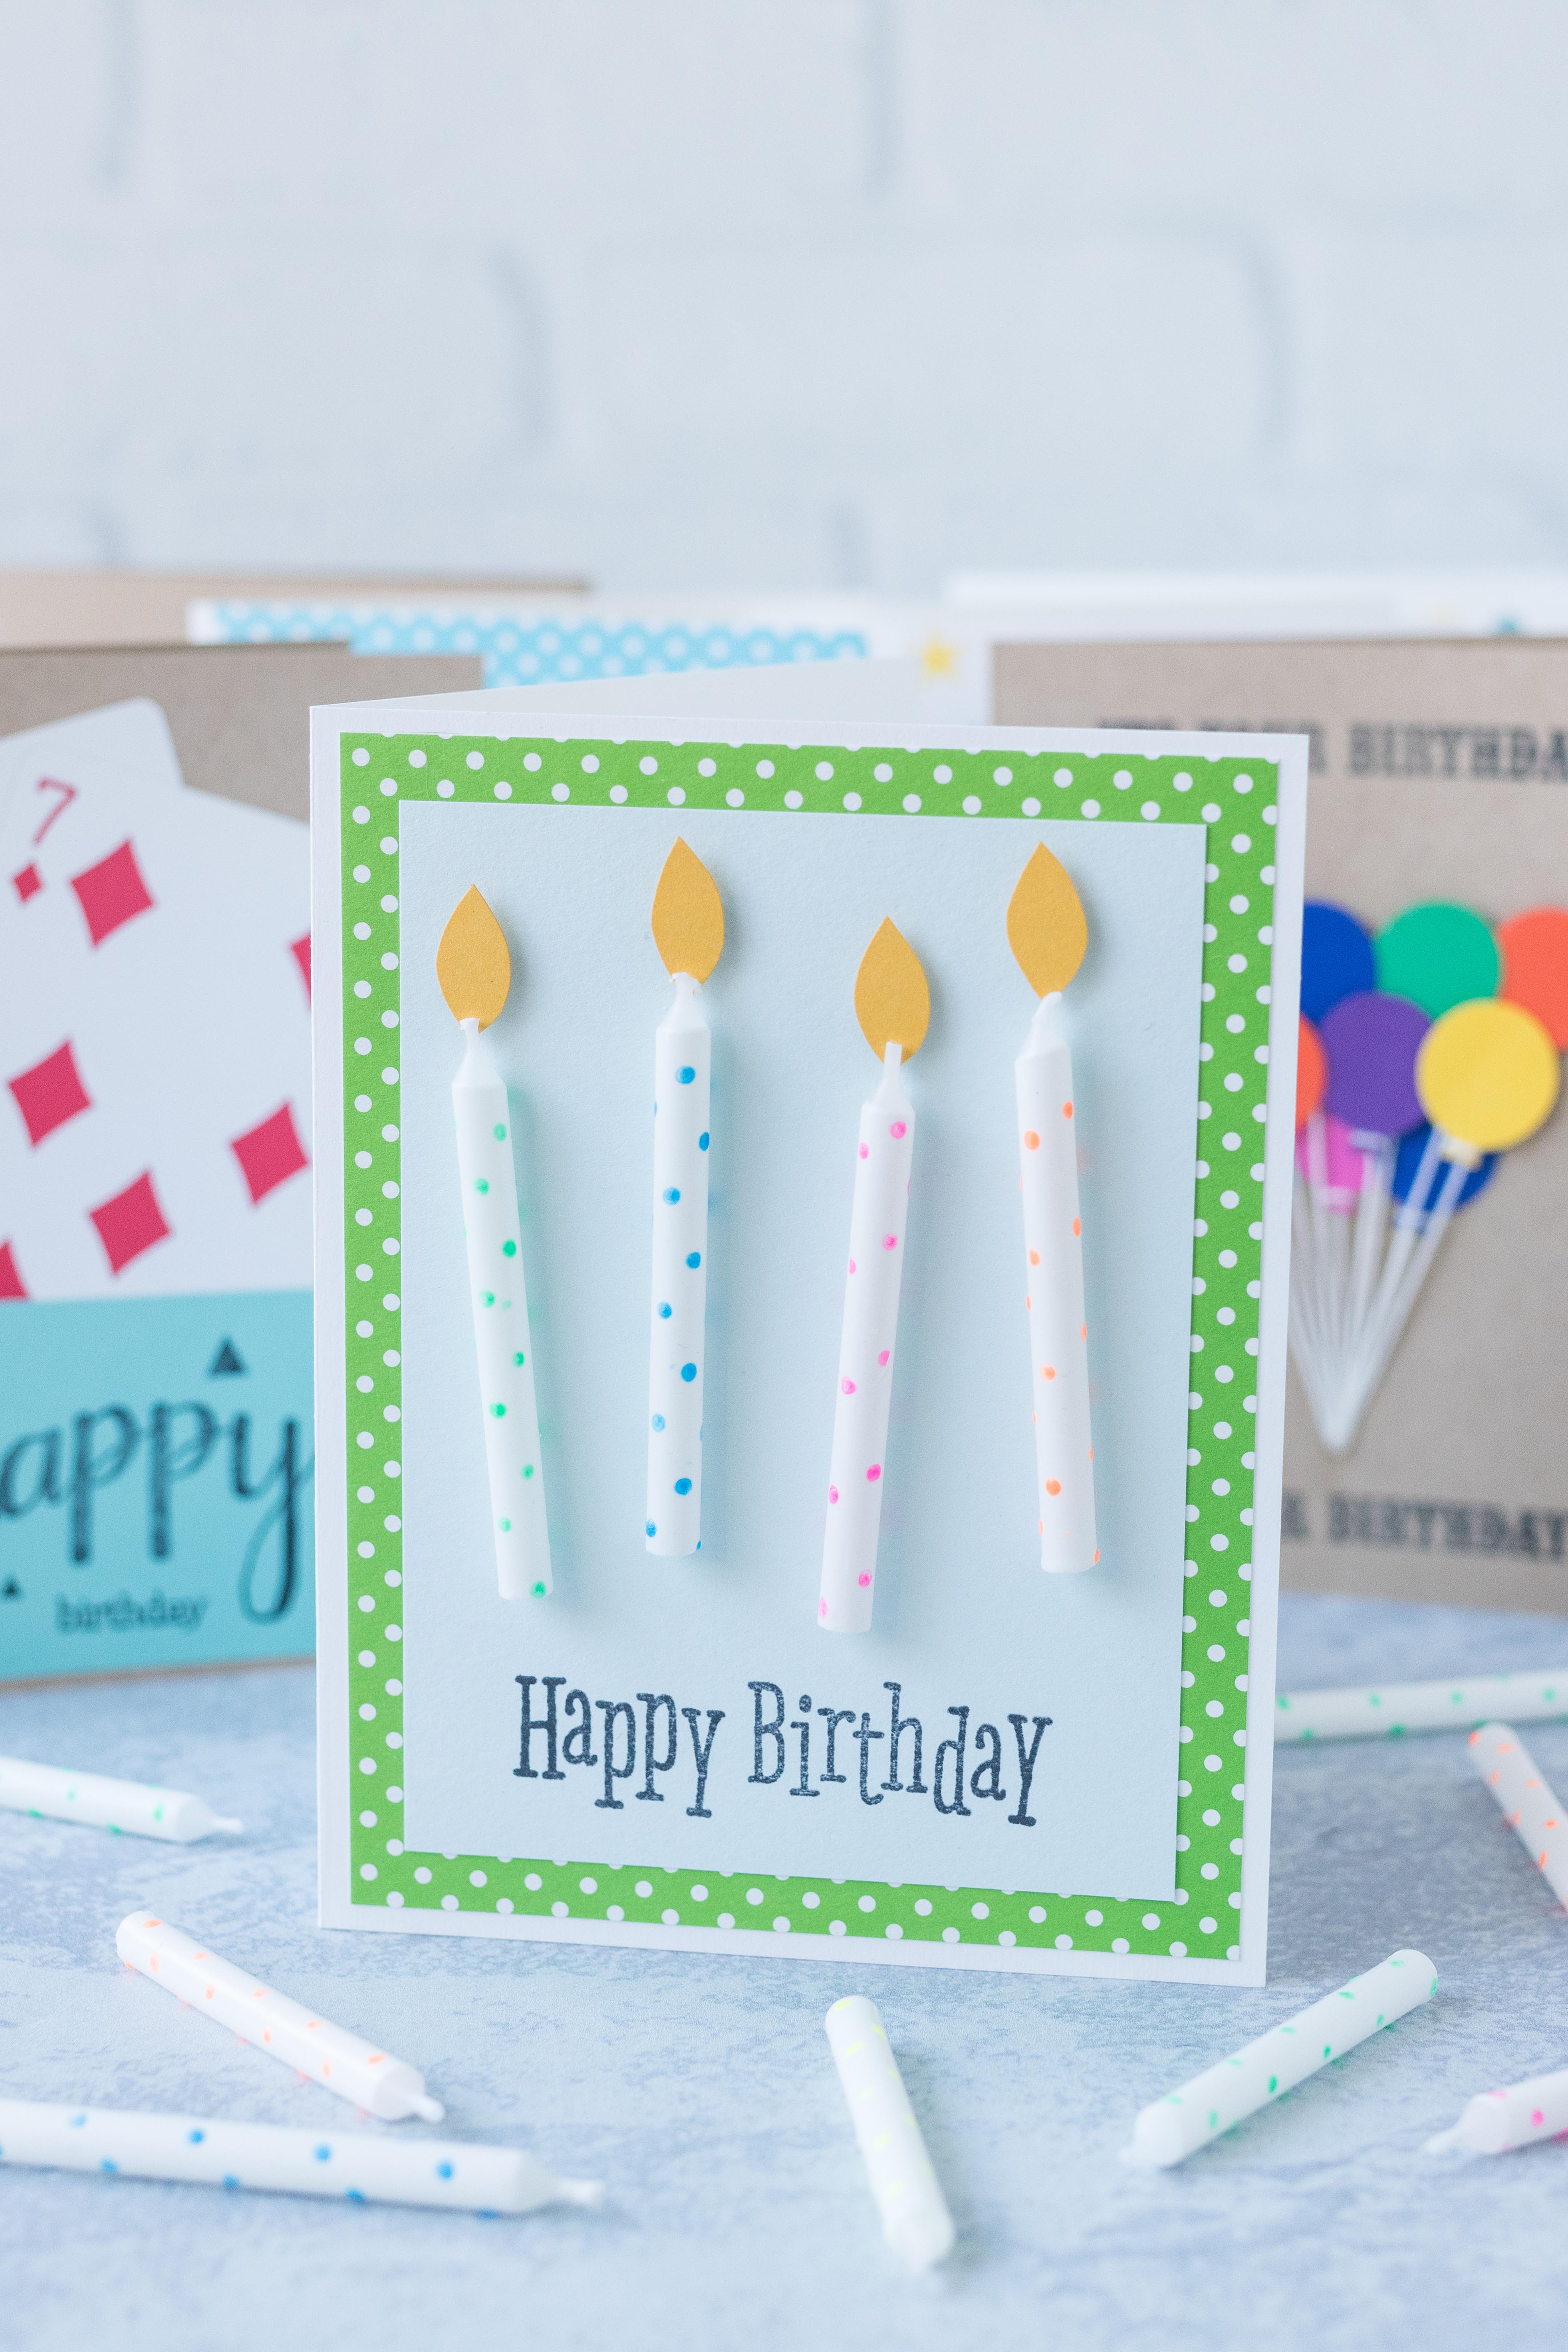 Homemade Happy Birthday Card Ideas 10 Simple Diy Birthday Cards Rose Clearfield